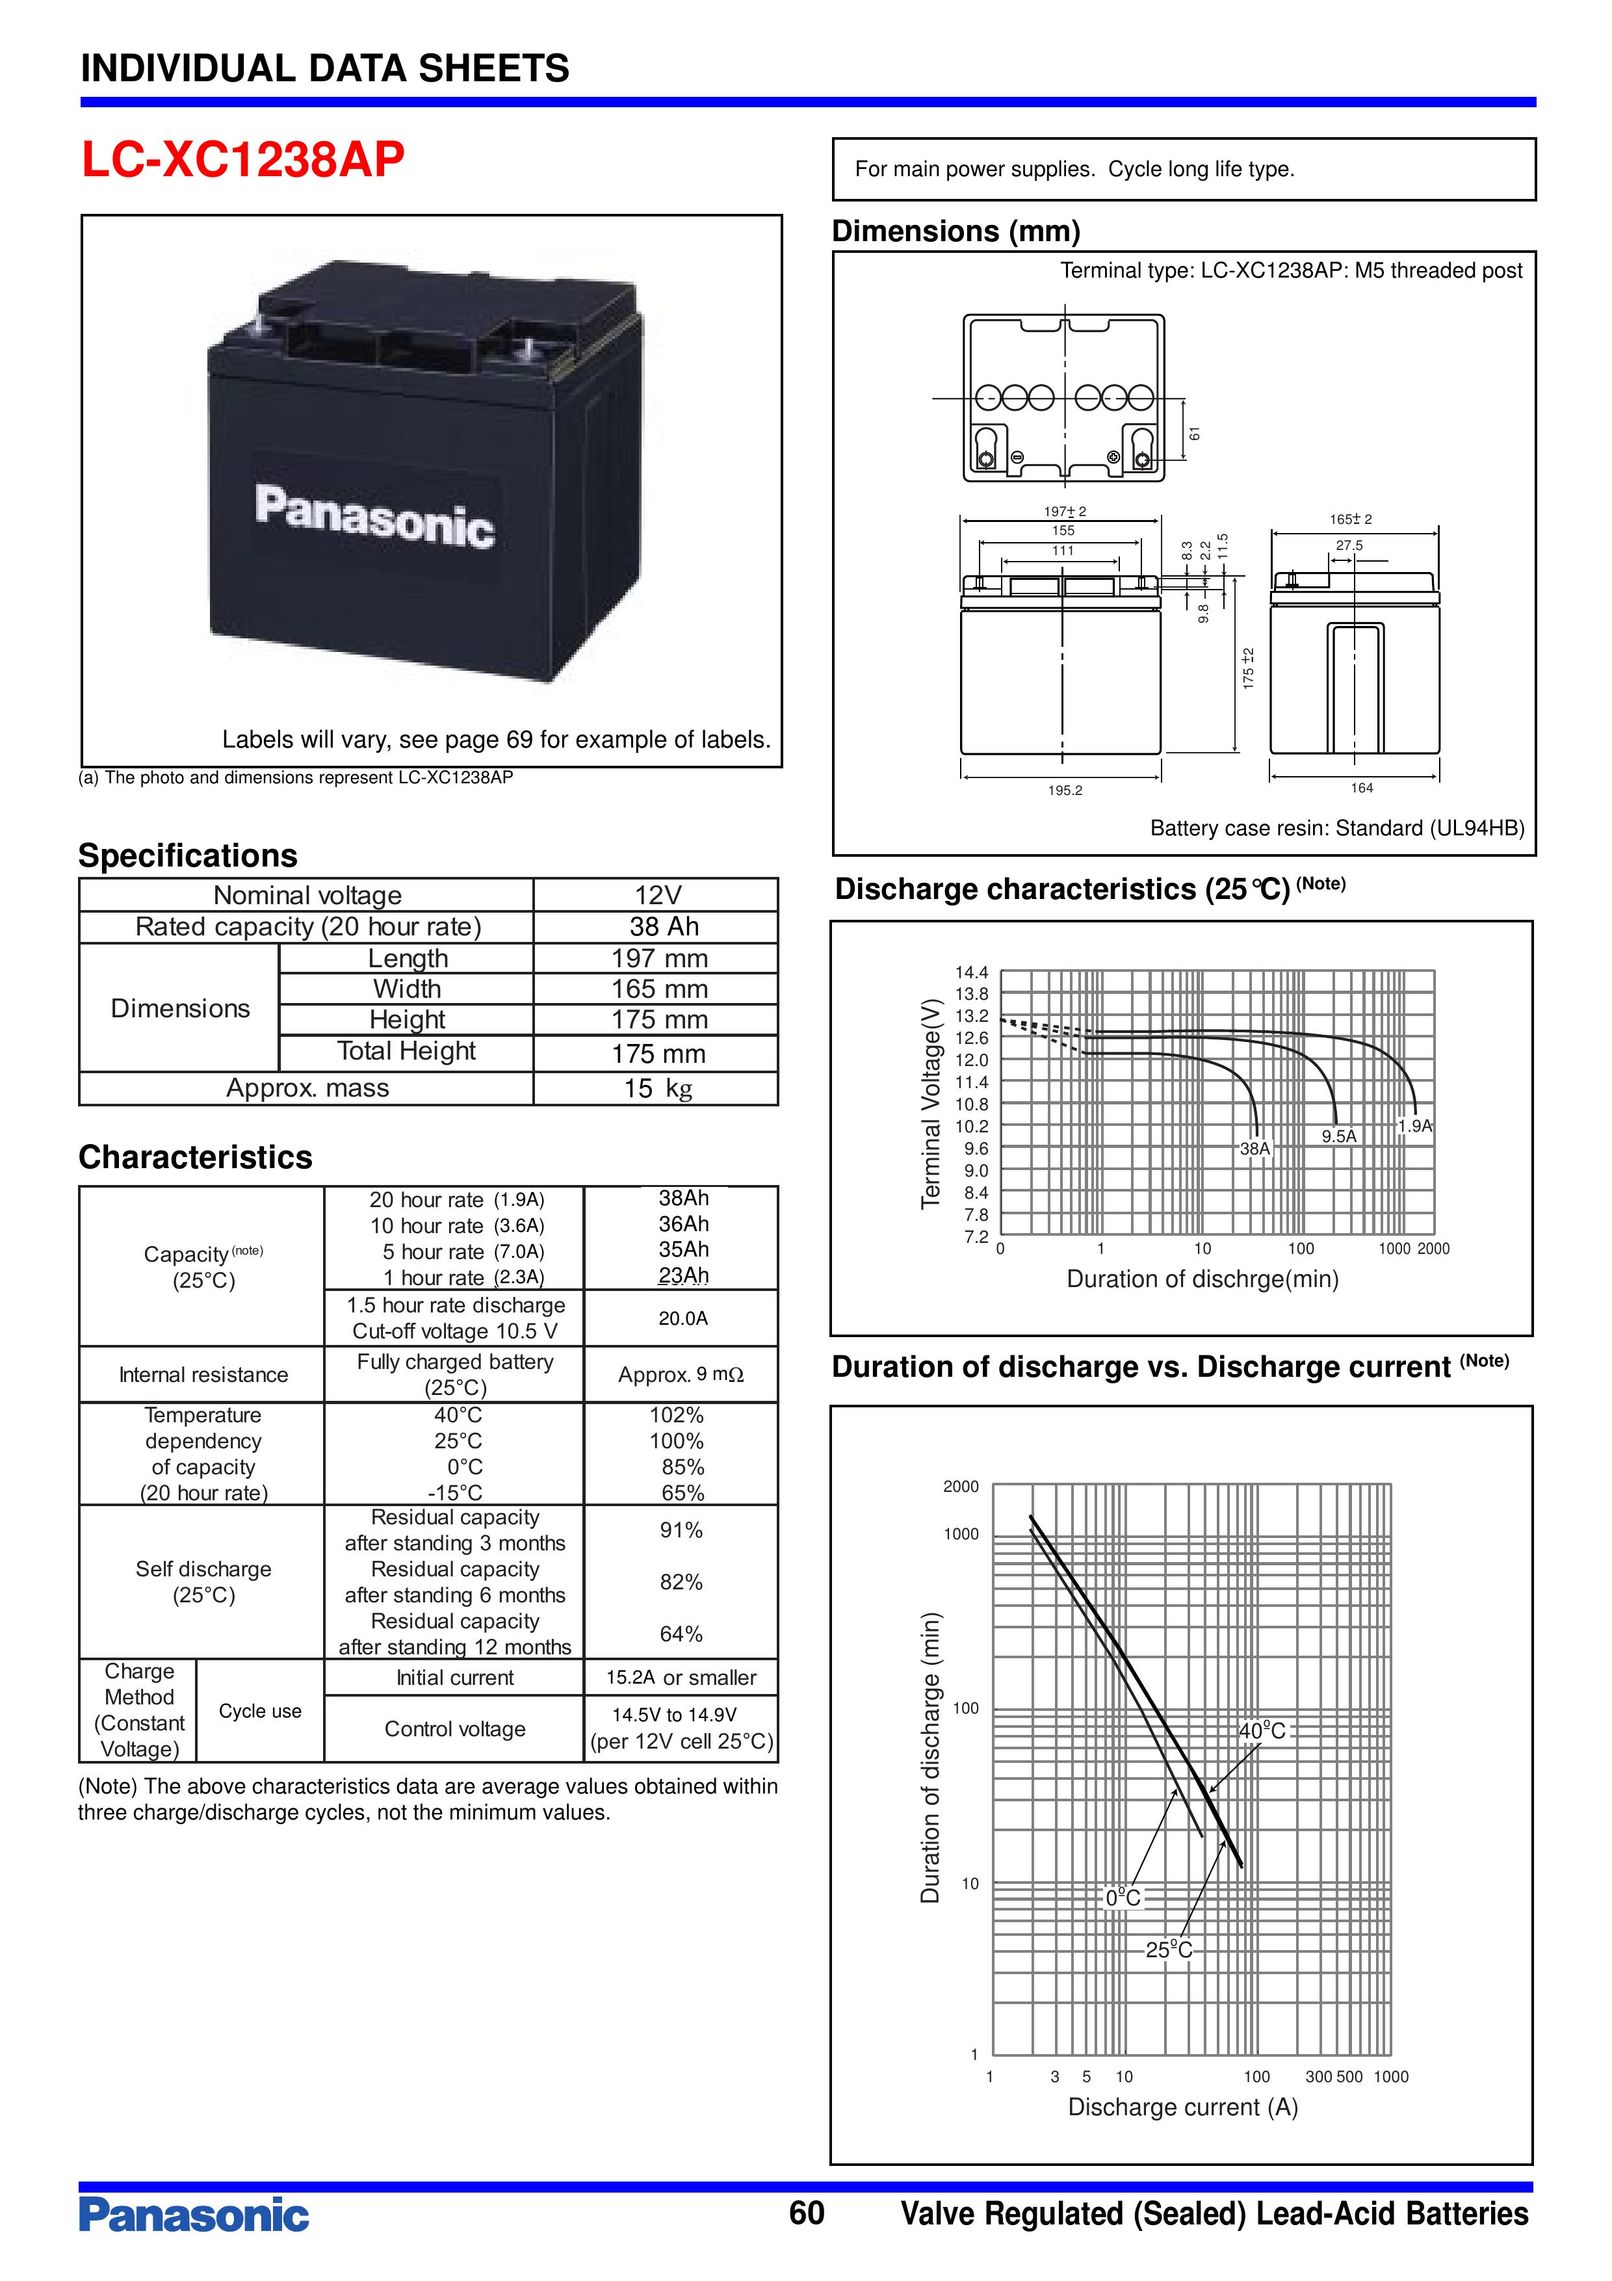 Panasonic LC-XC1238AP Power Supply User Manual